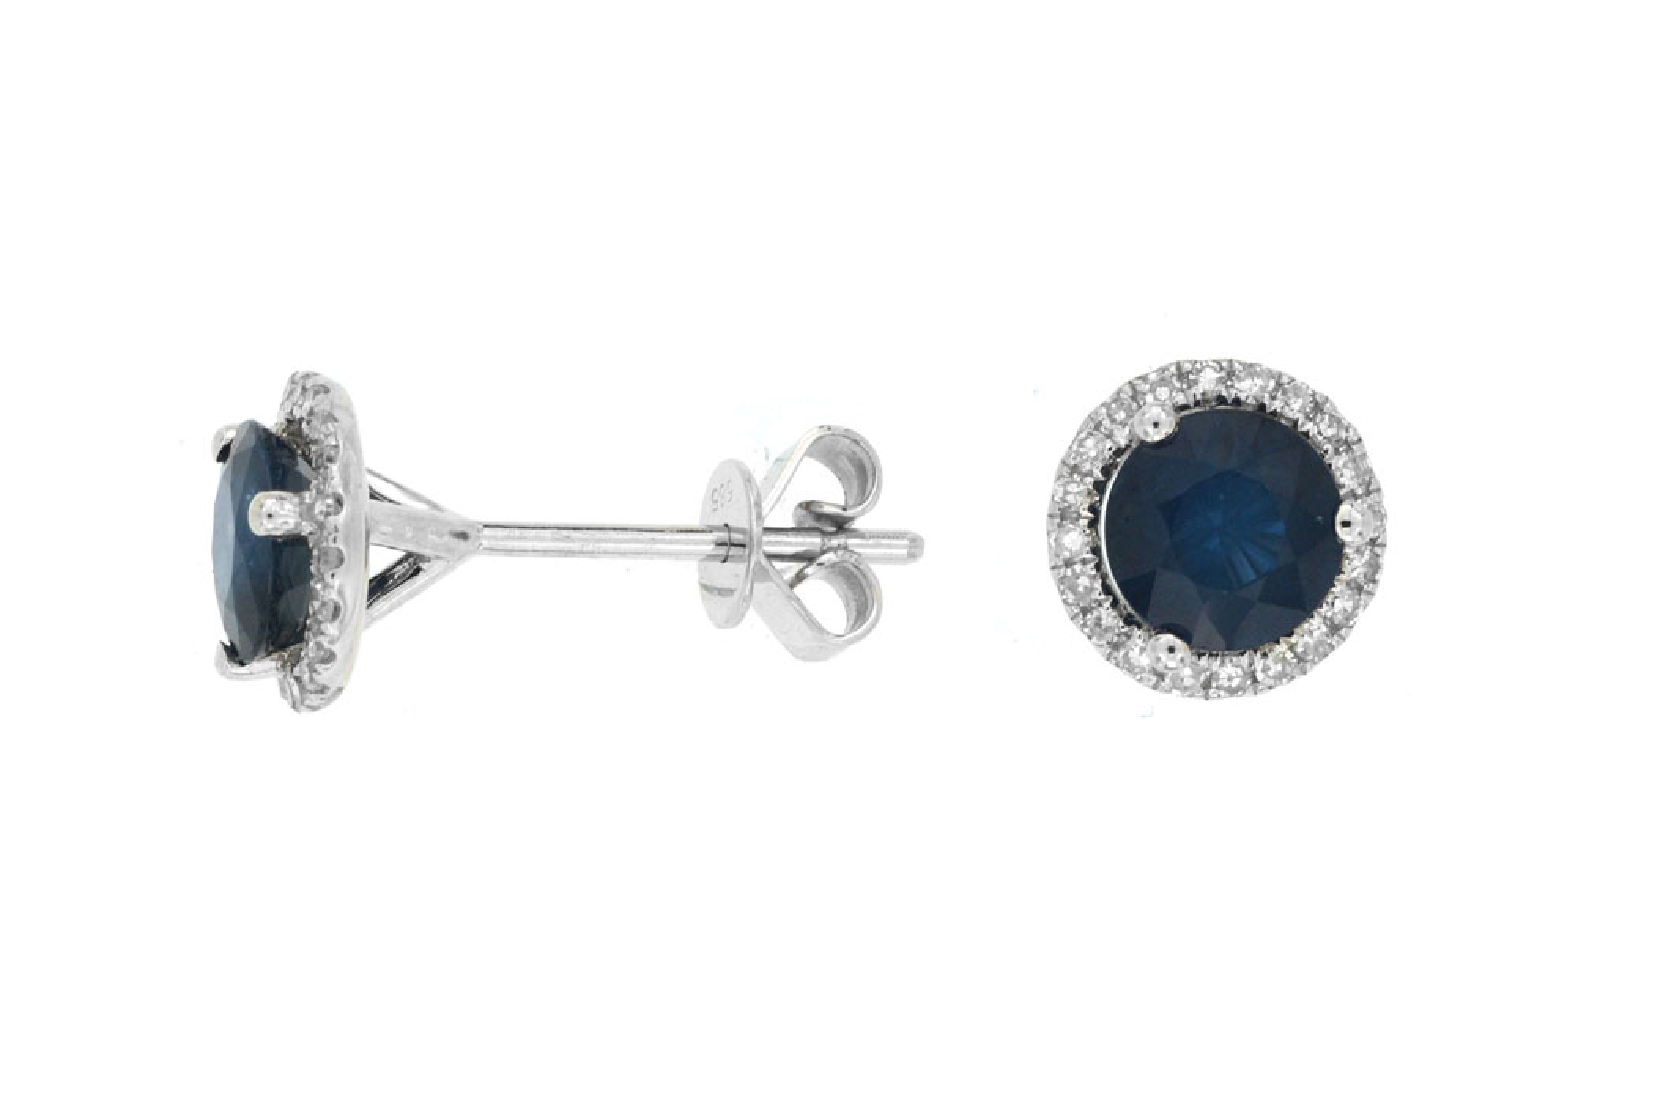 14K White Gold Round Sapphire Stud Earrings with Diamond Halo

1.60cttw Sapphires
0.16cttw Diamonds 